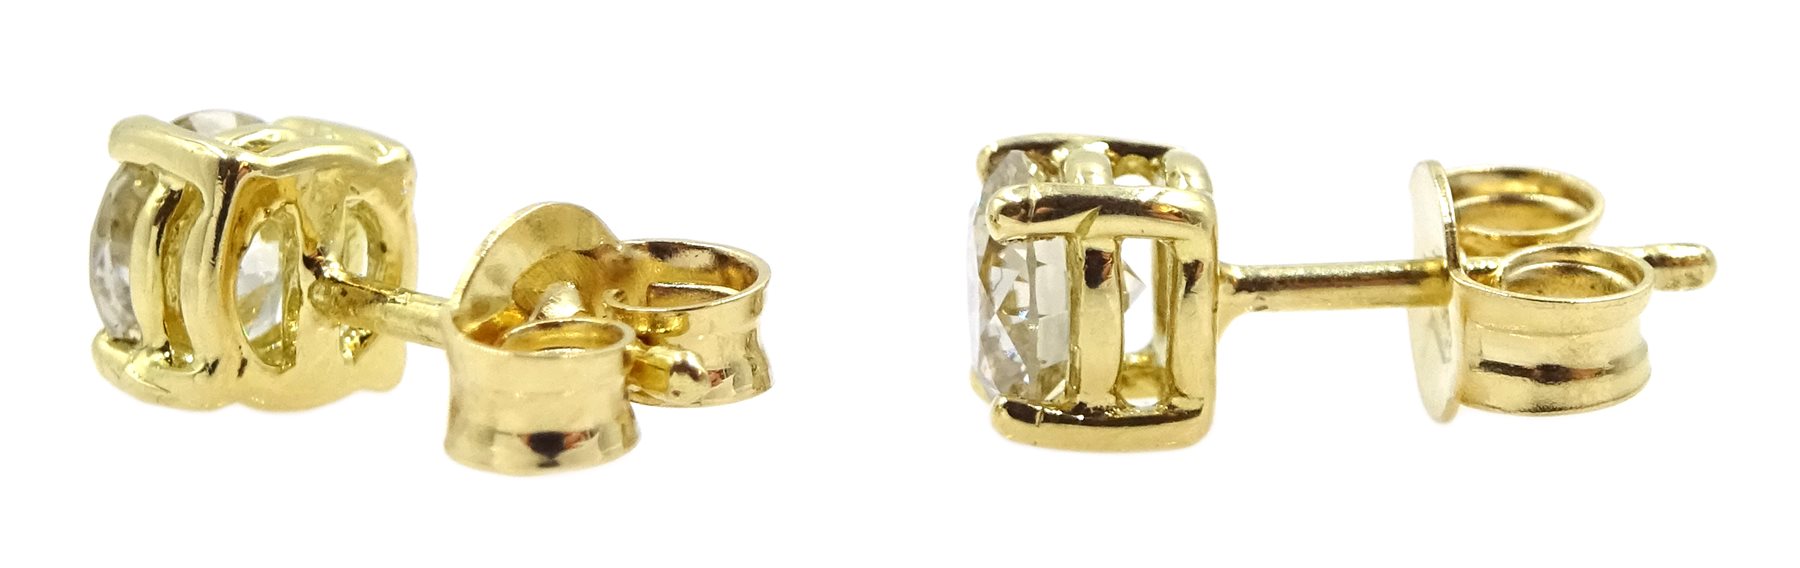 Pair of 18ct gold diamond stud earrings - Image 2 of 6